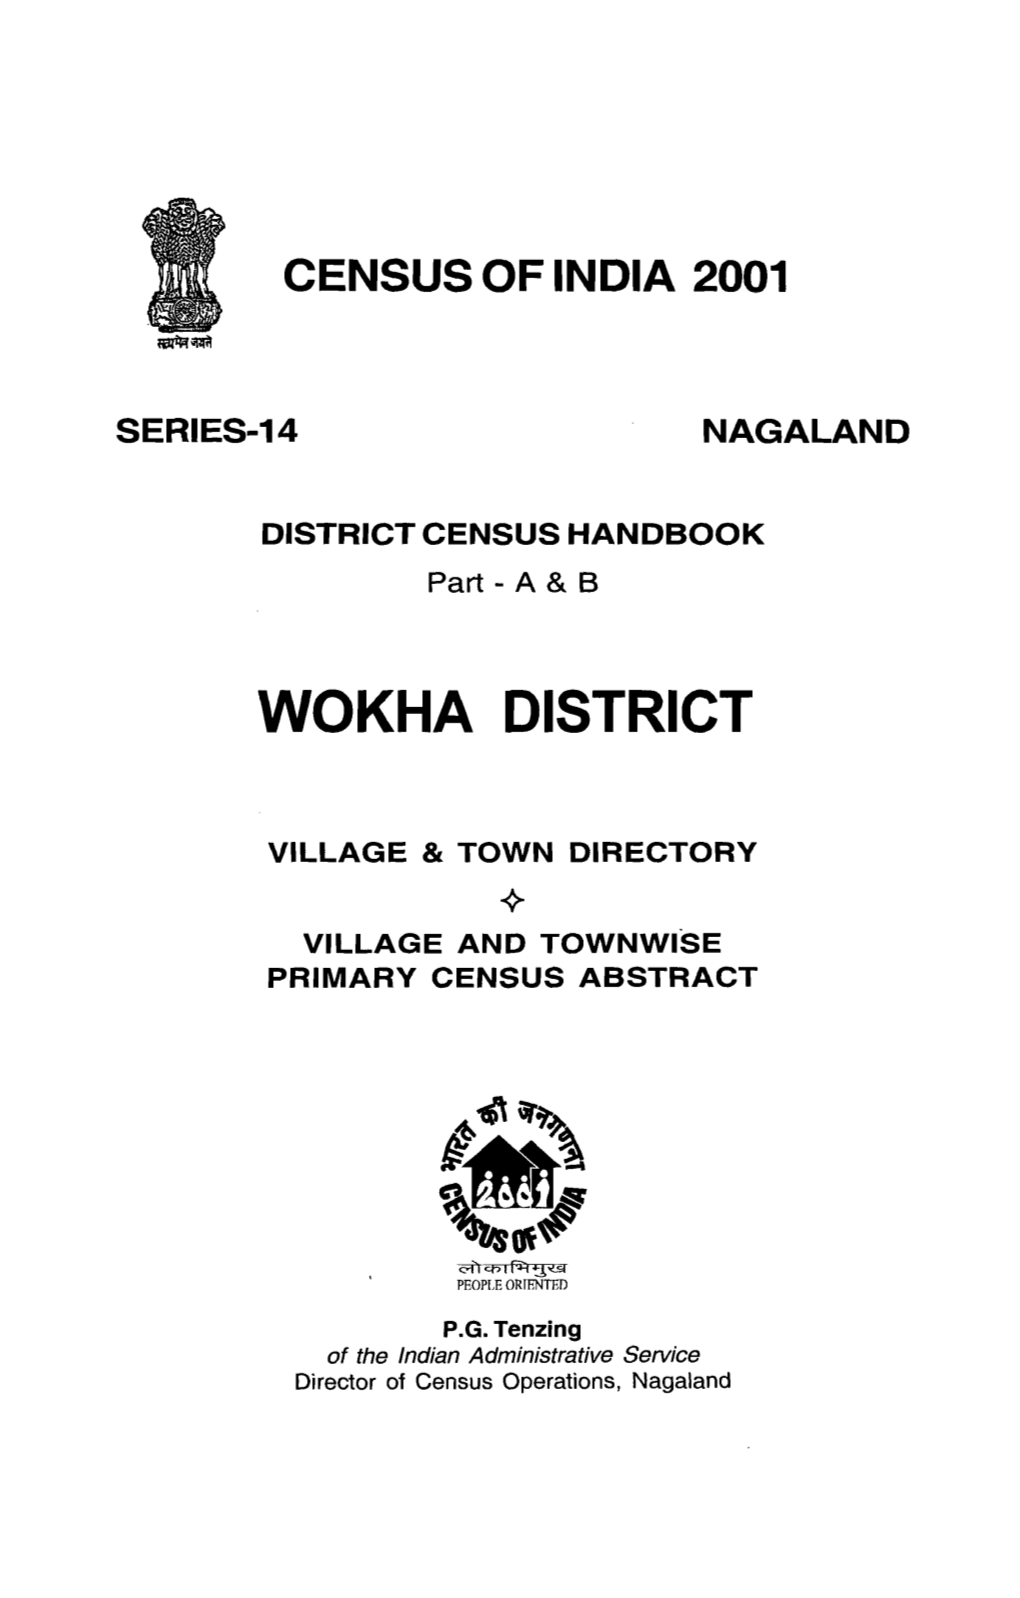 District Census Handbook, Wokha, Part -XII,A & B, Series-14, Nagaland